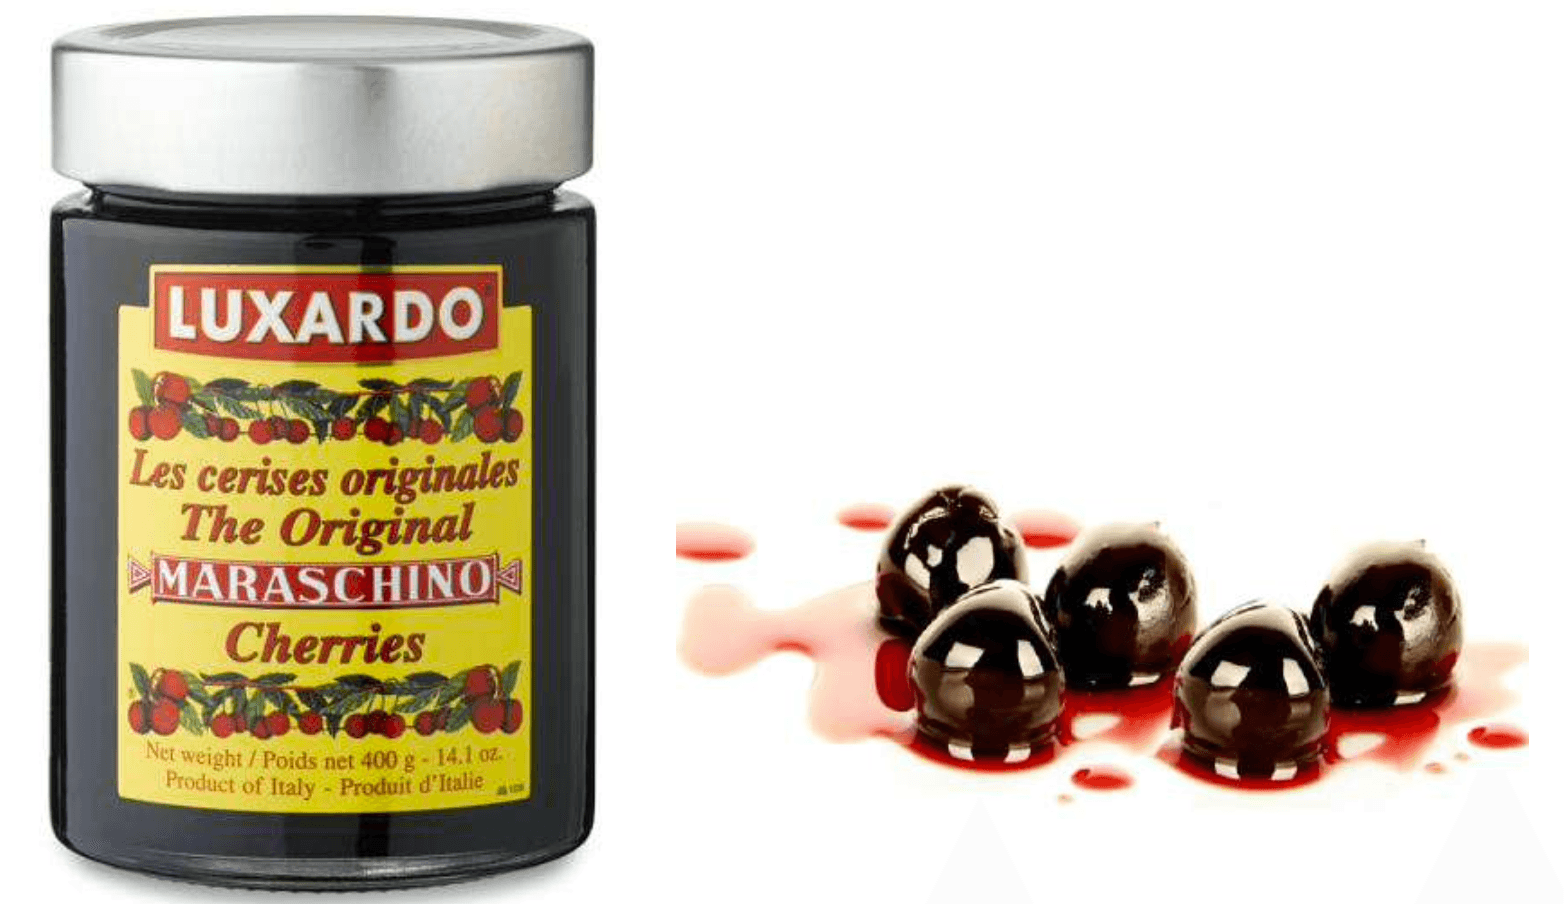 Luxardo Original Maraschino Cherries with Marasca Syrup 400g - reddotgreendot